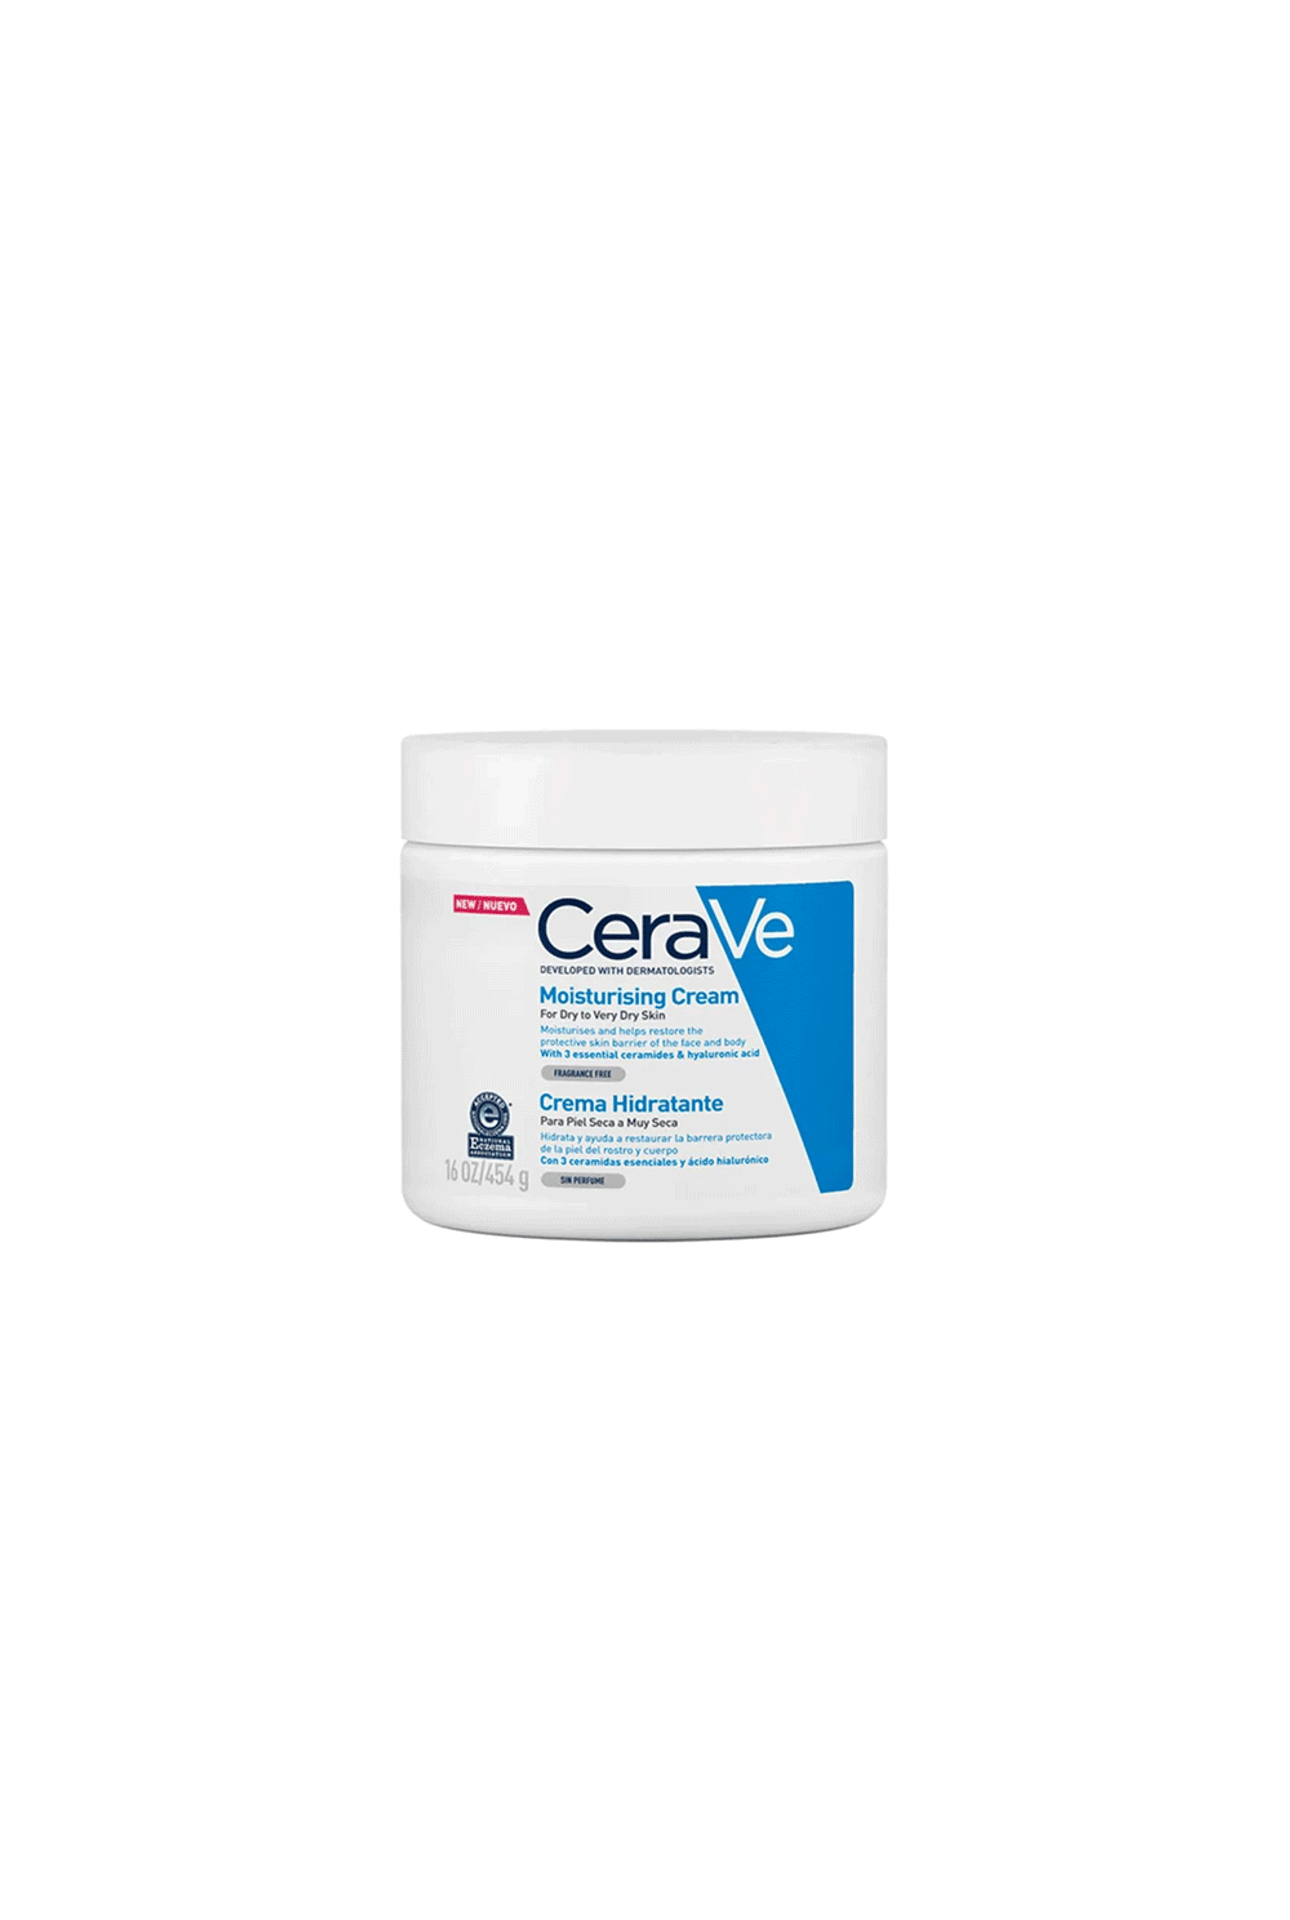 Crema-Hidratante-CeraVe-para-piel-seca-a-muy-seca-x-454-ml-CeraVe